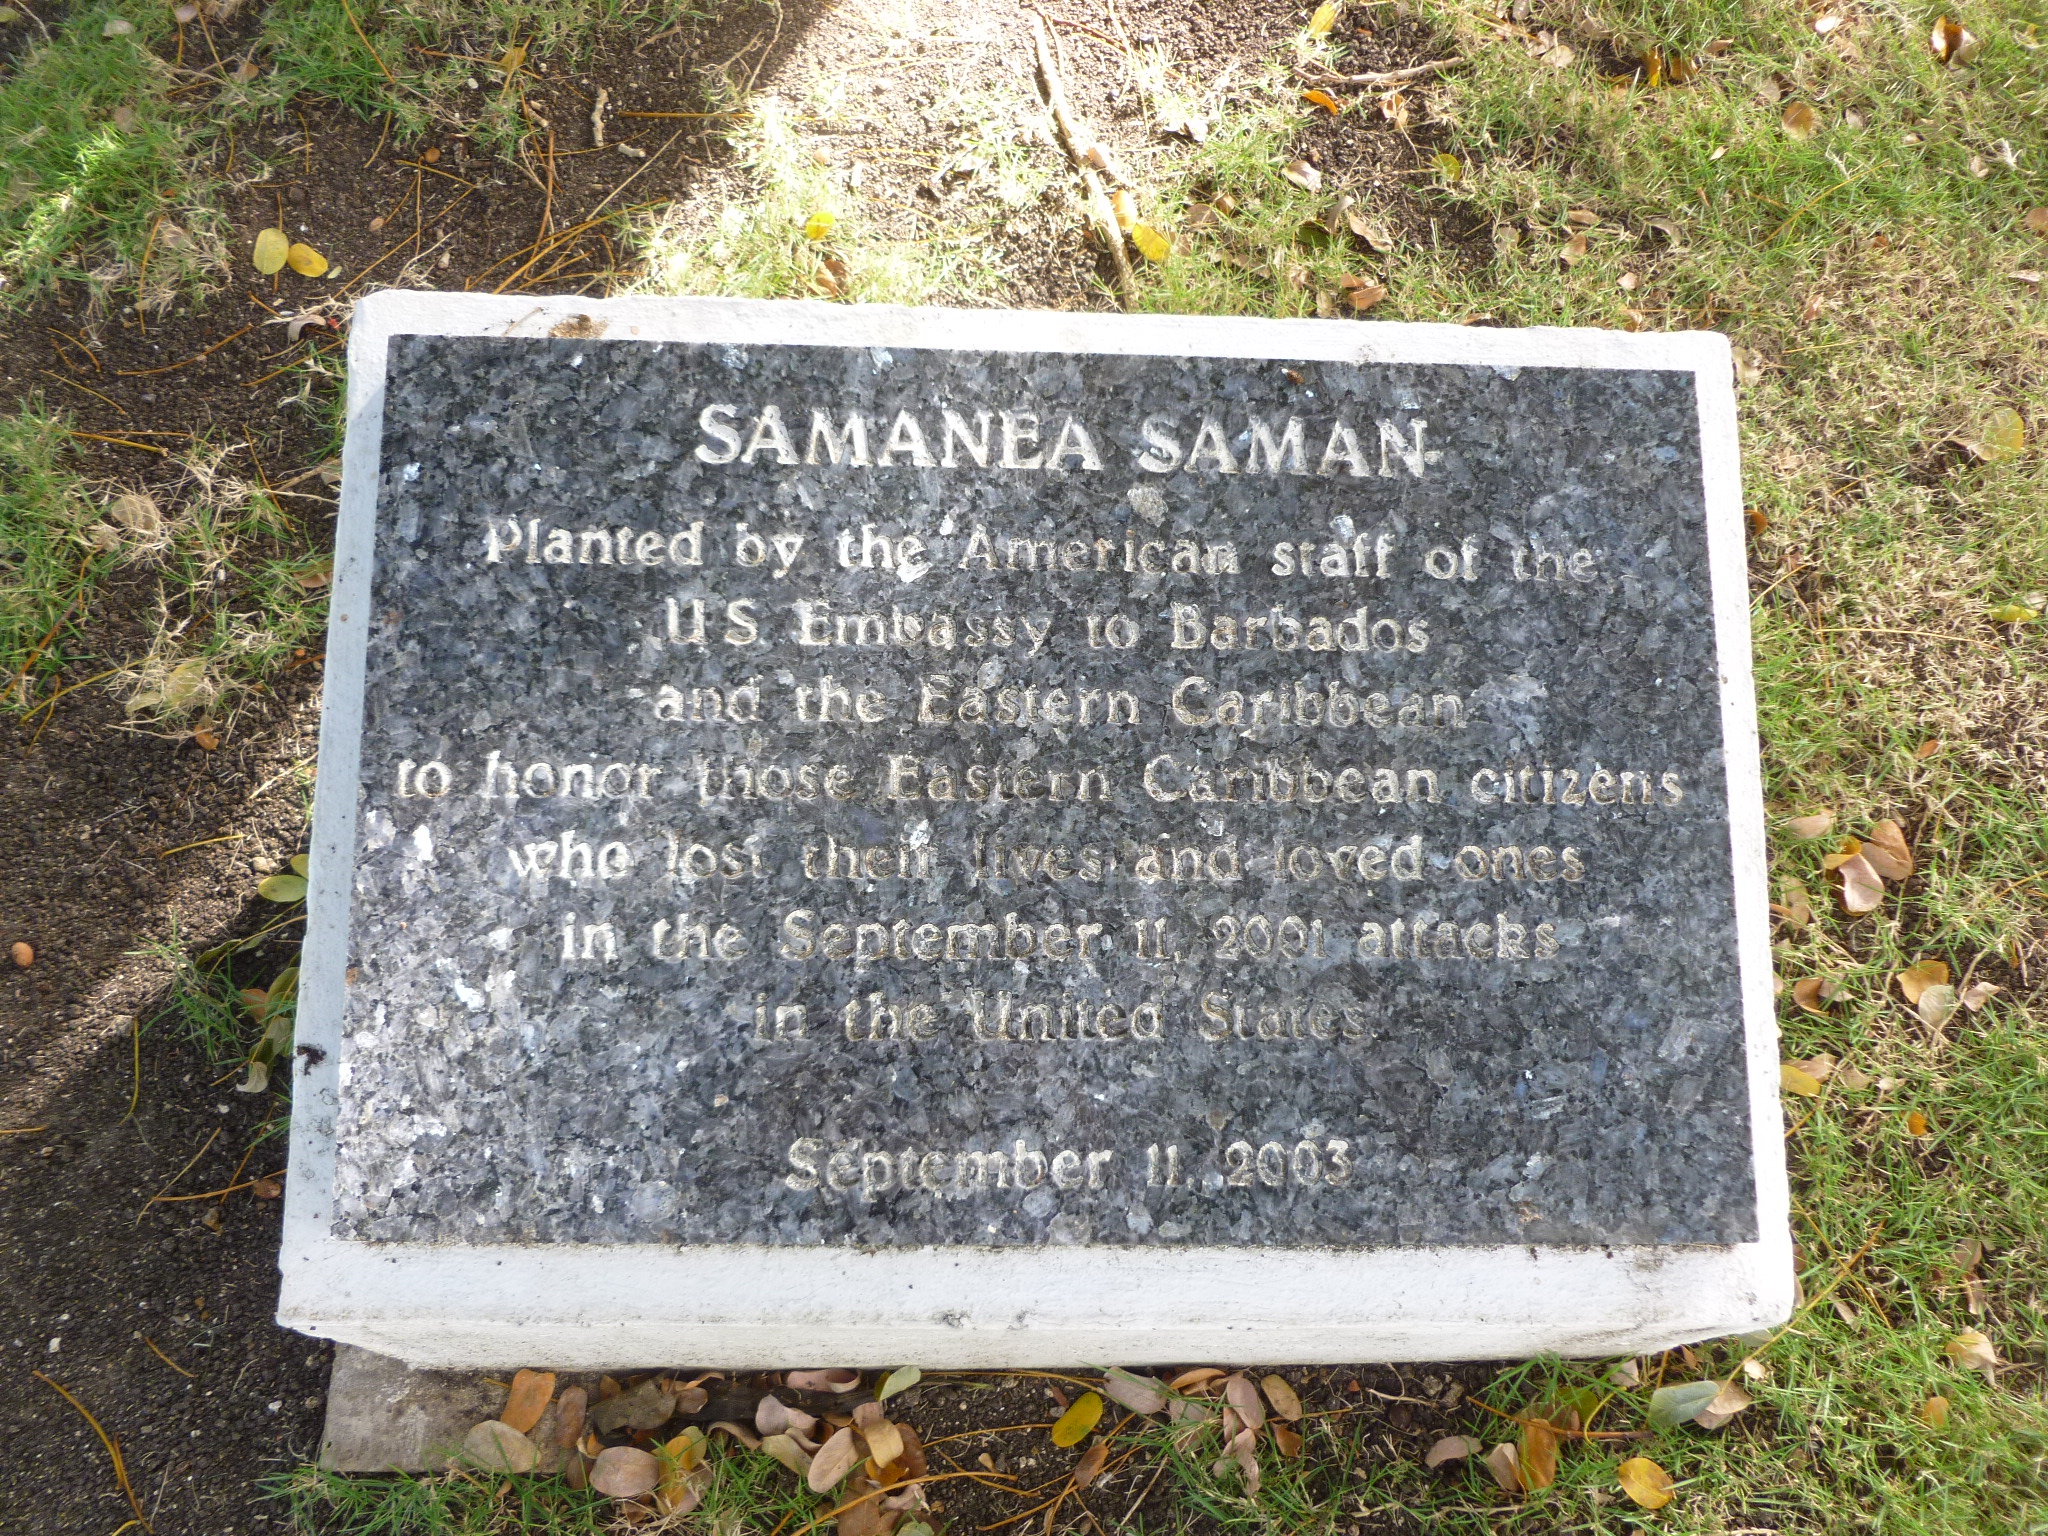 Eastern Caribbean Citizens plaque Barbados.JPG